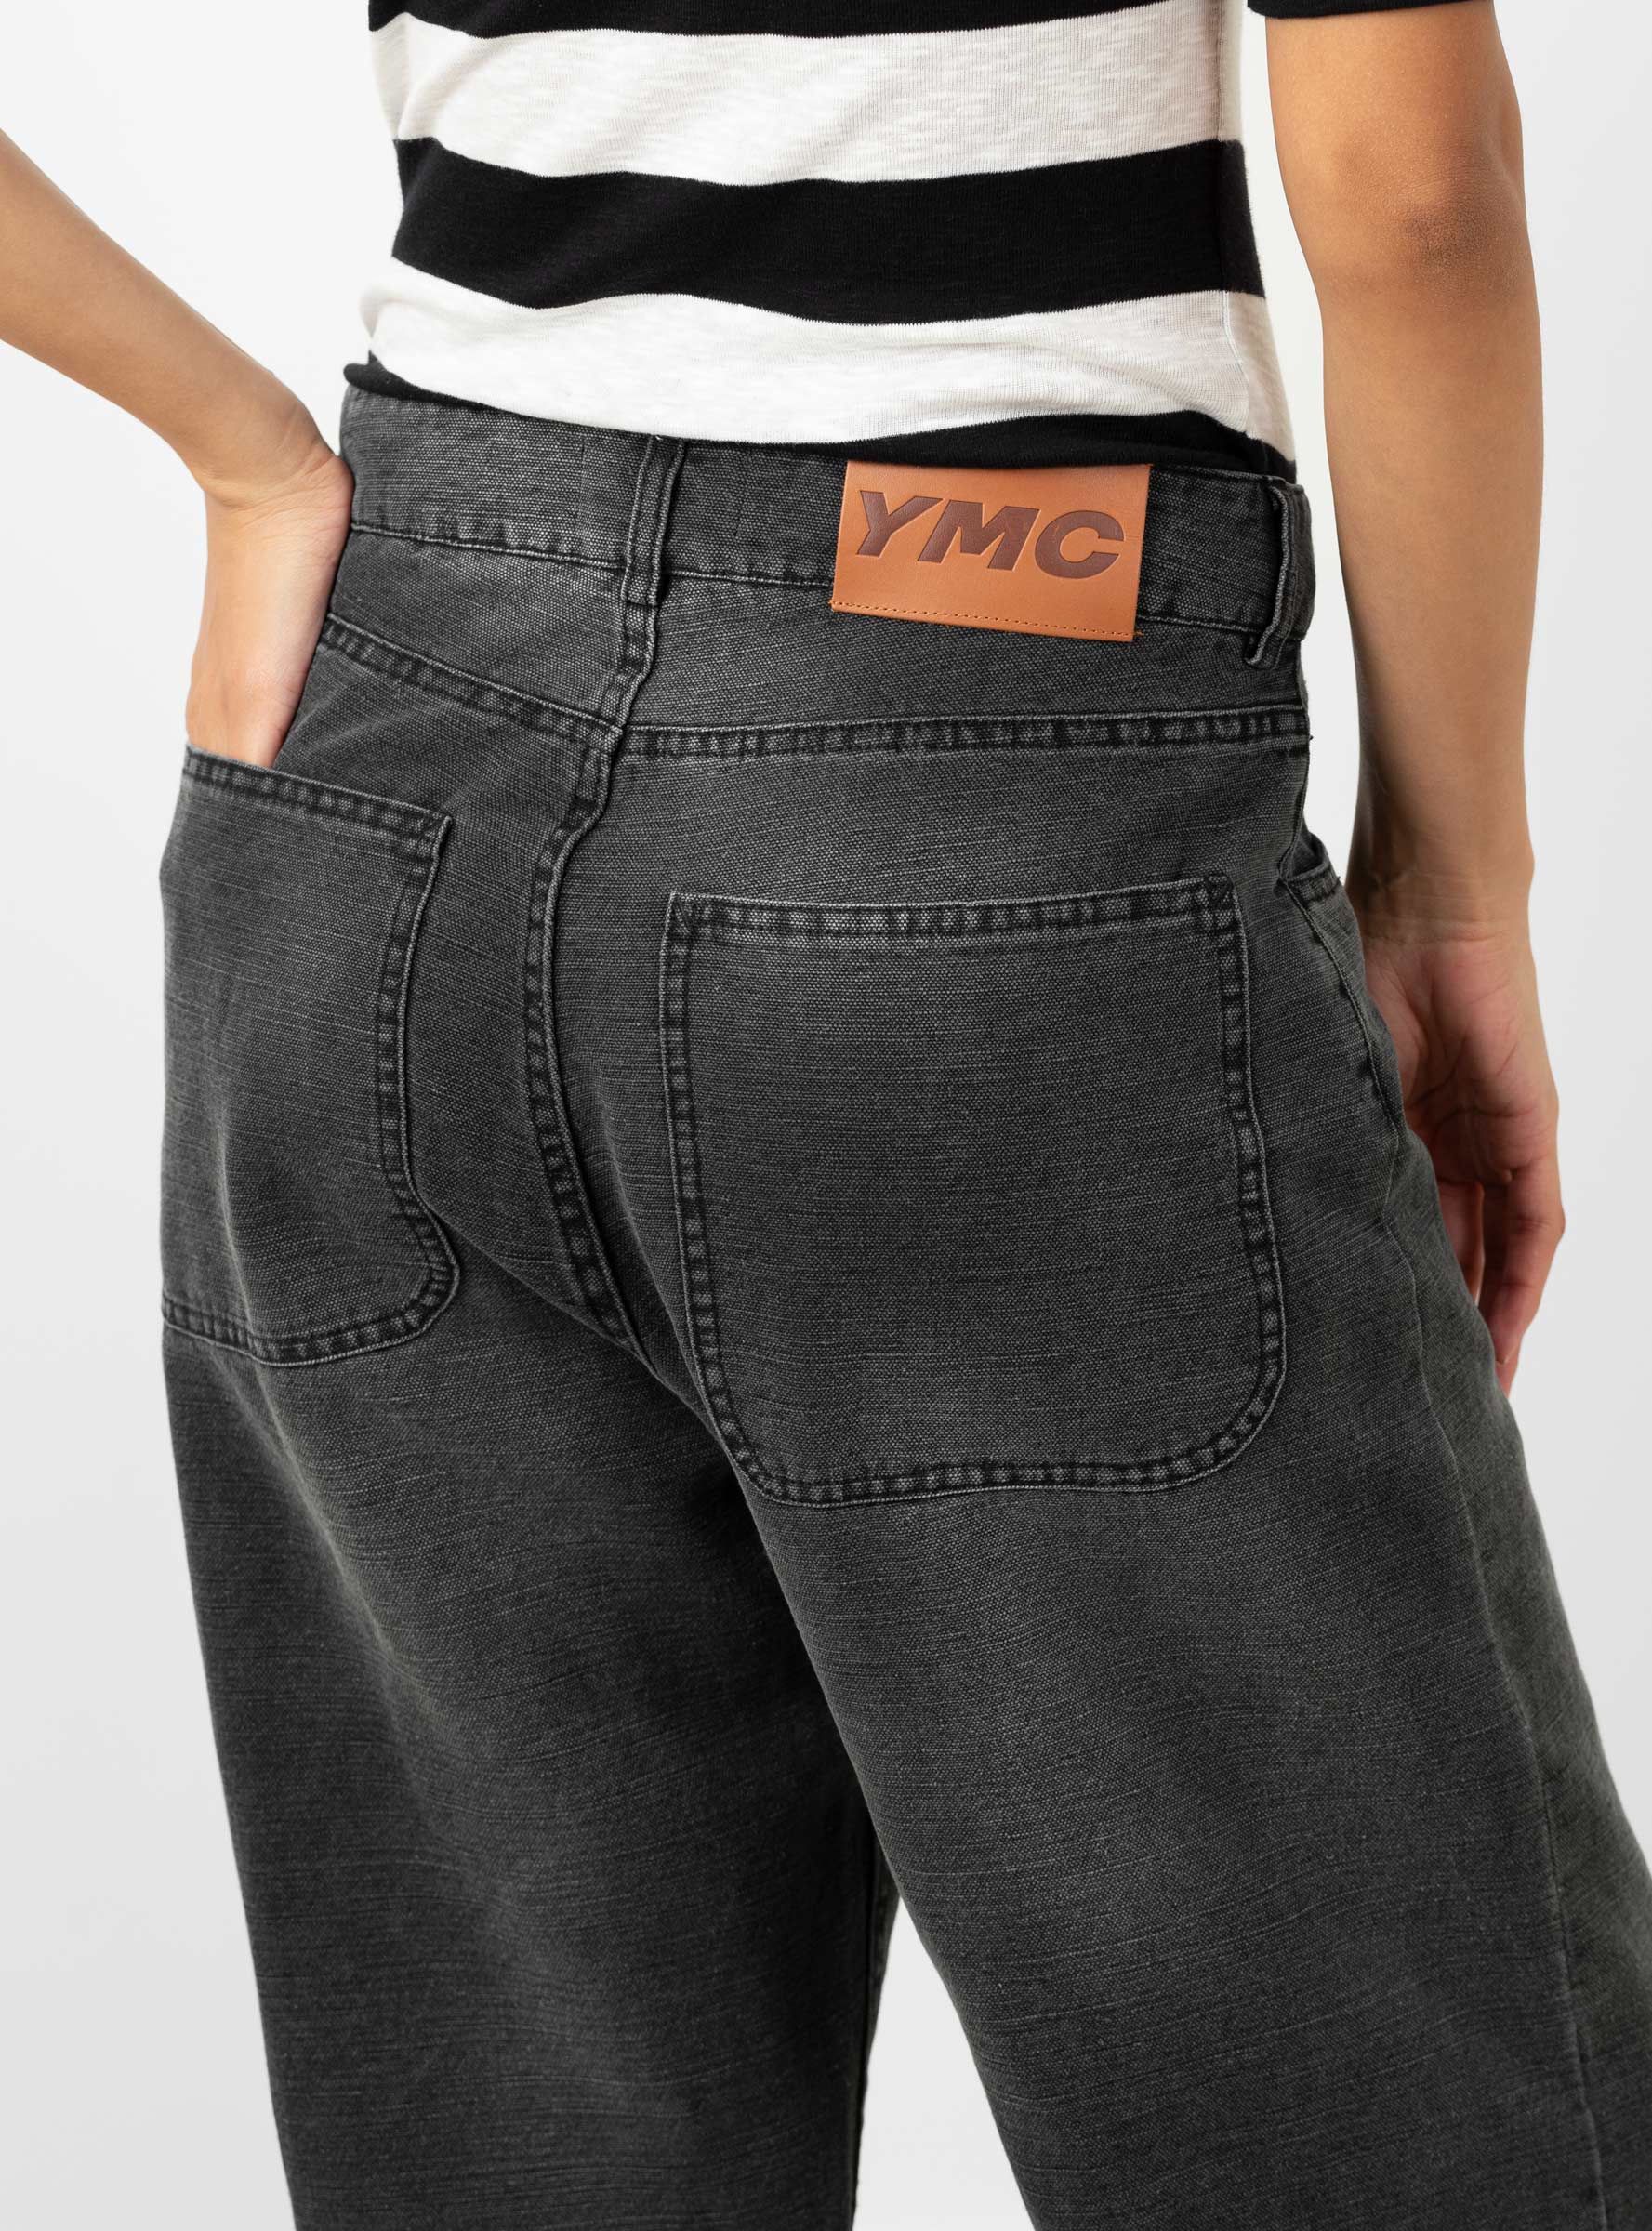 Ymc YMC Silver Jean Black - Size: Large